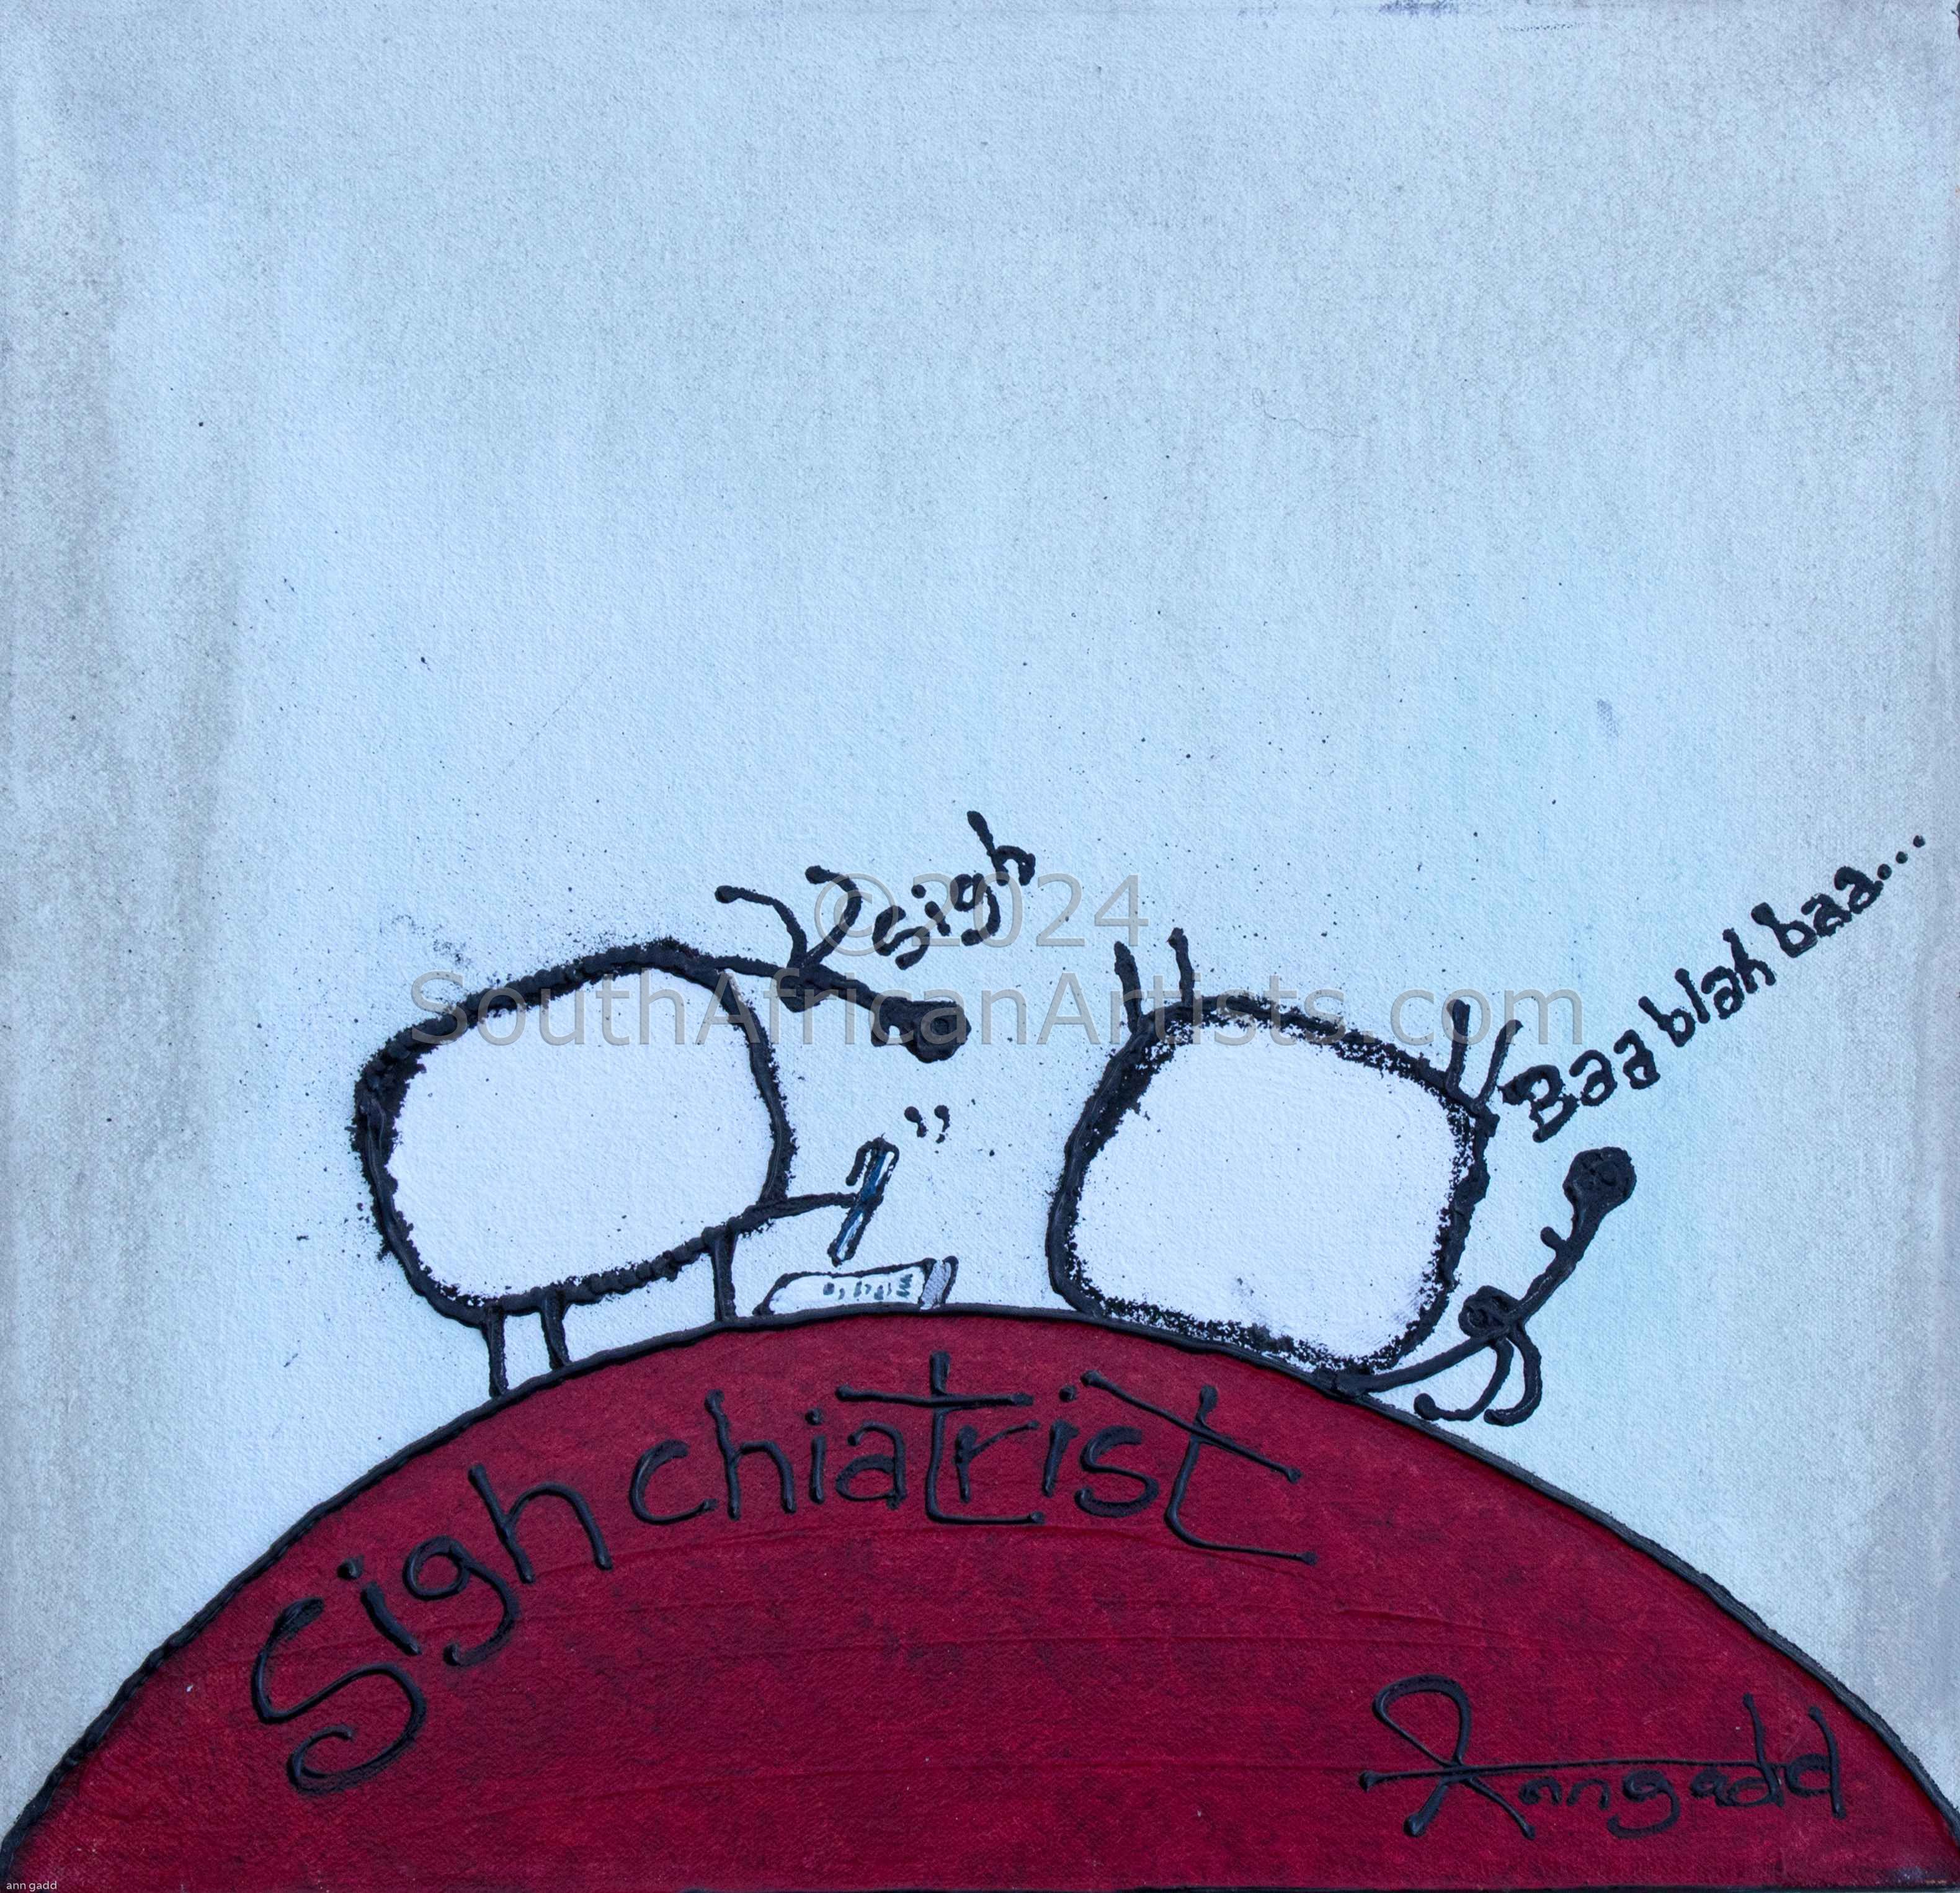 The Sigh-chiatrist (psychiatrist)